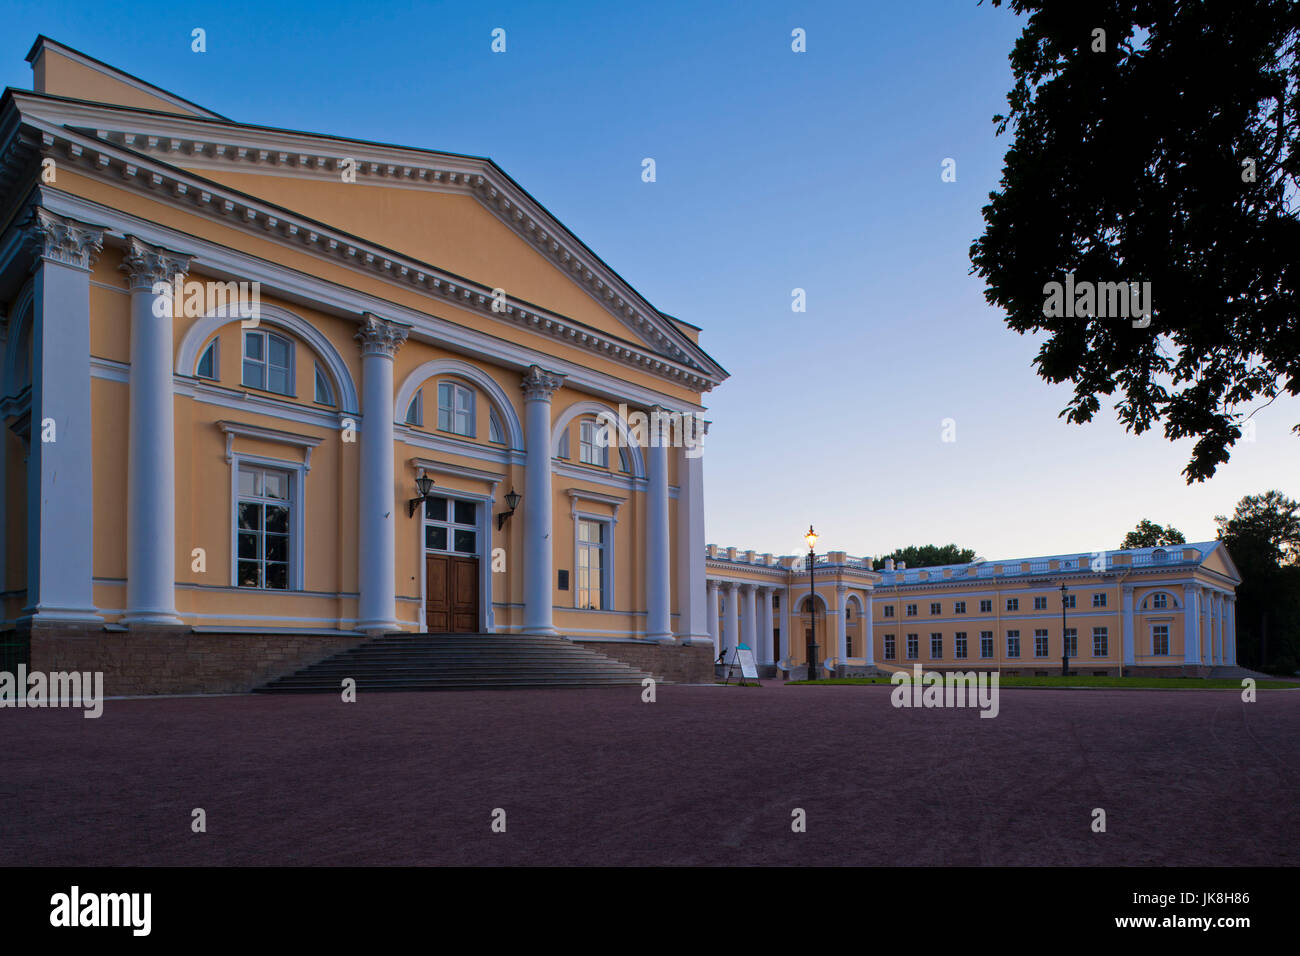 Russia, Saint Petersburg, Pushkin-Tsarskoye Selo, Alexander Palace, final home of Czar Nicholas II until the Russian Revolution, dusk Stock Photo